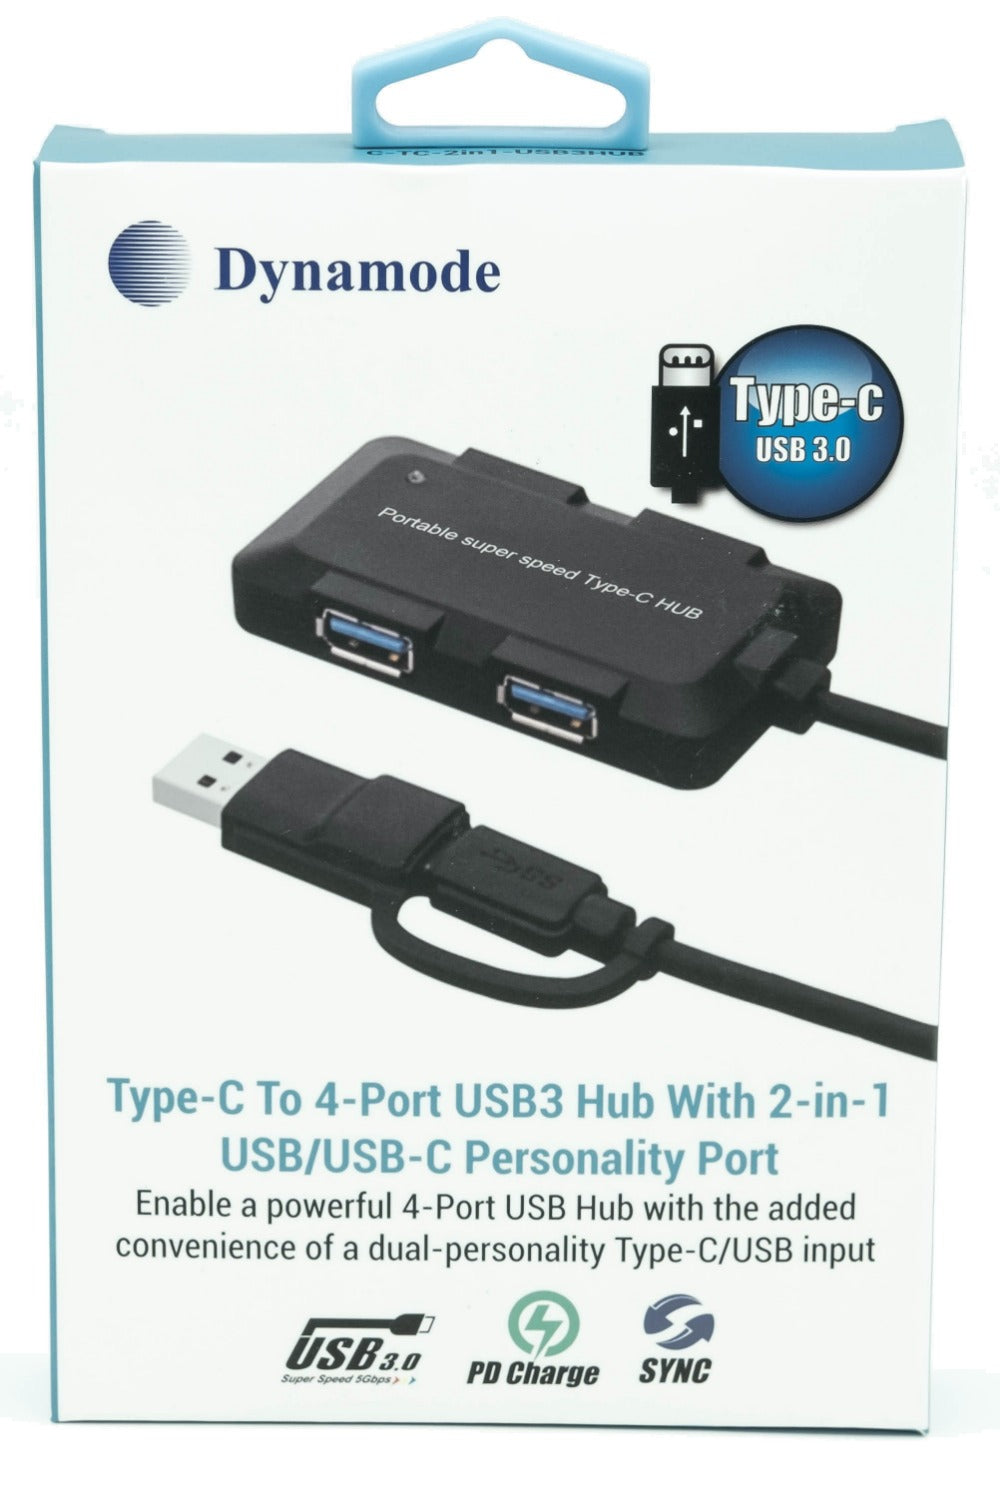 High-performance Type-C hub with USB input